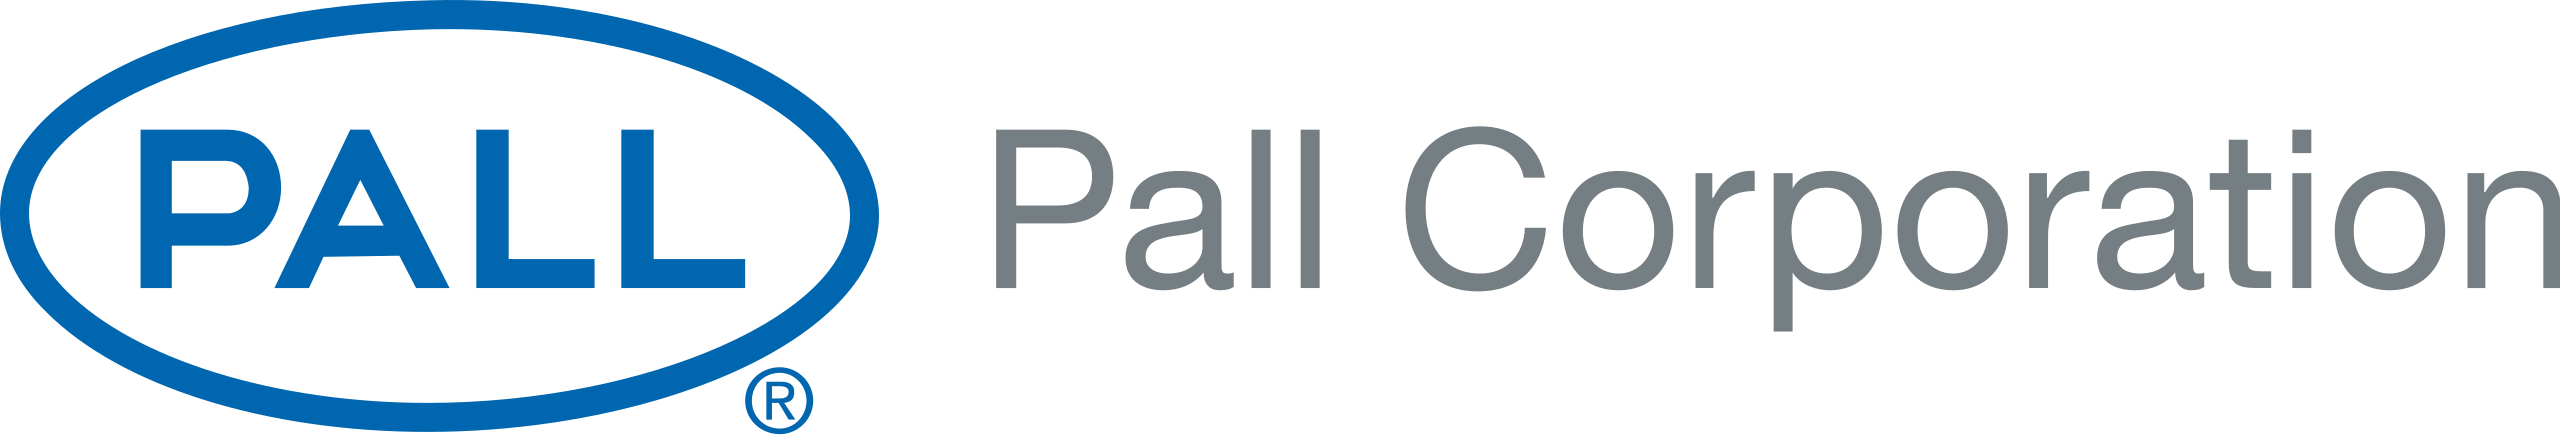 Pall-Corporation-Logo